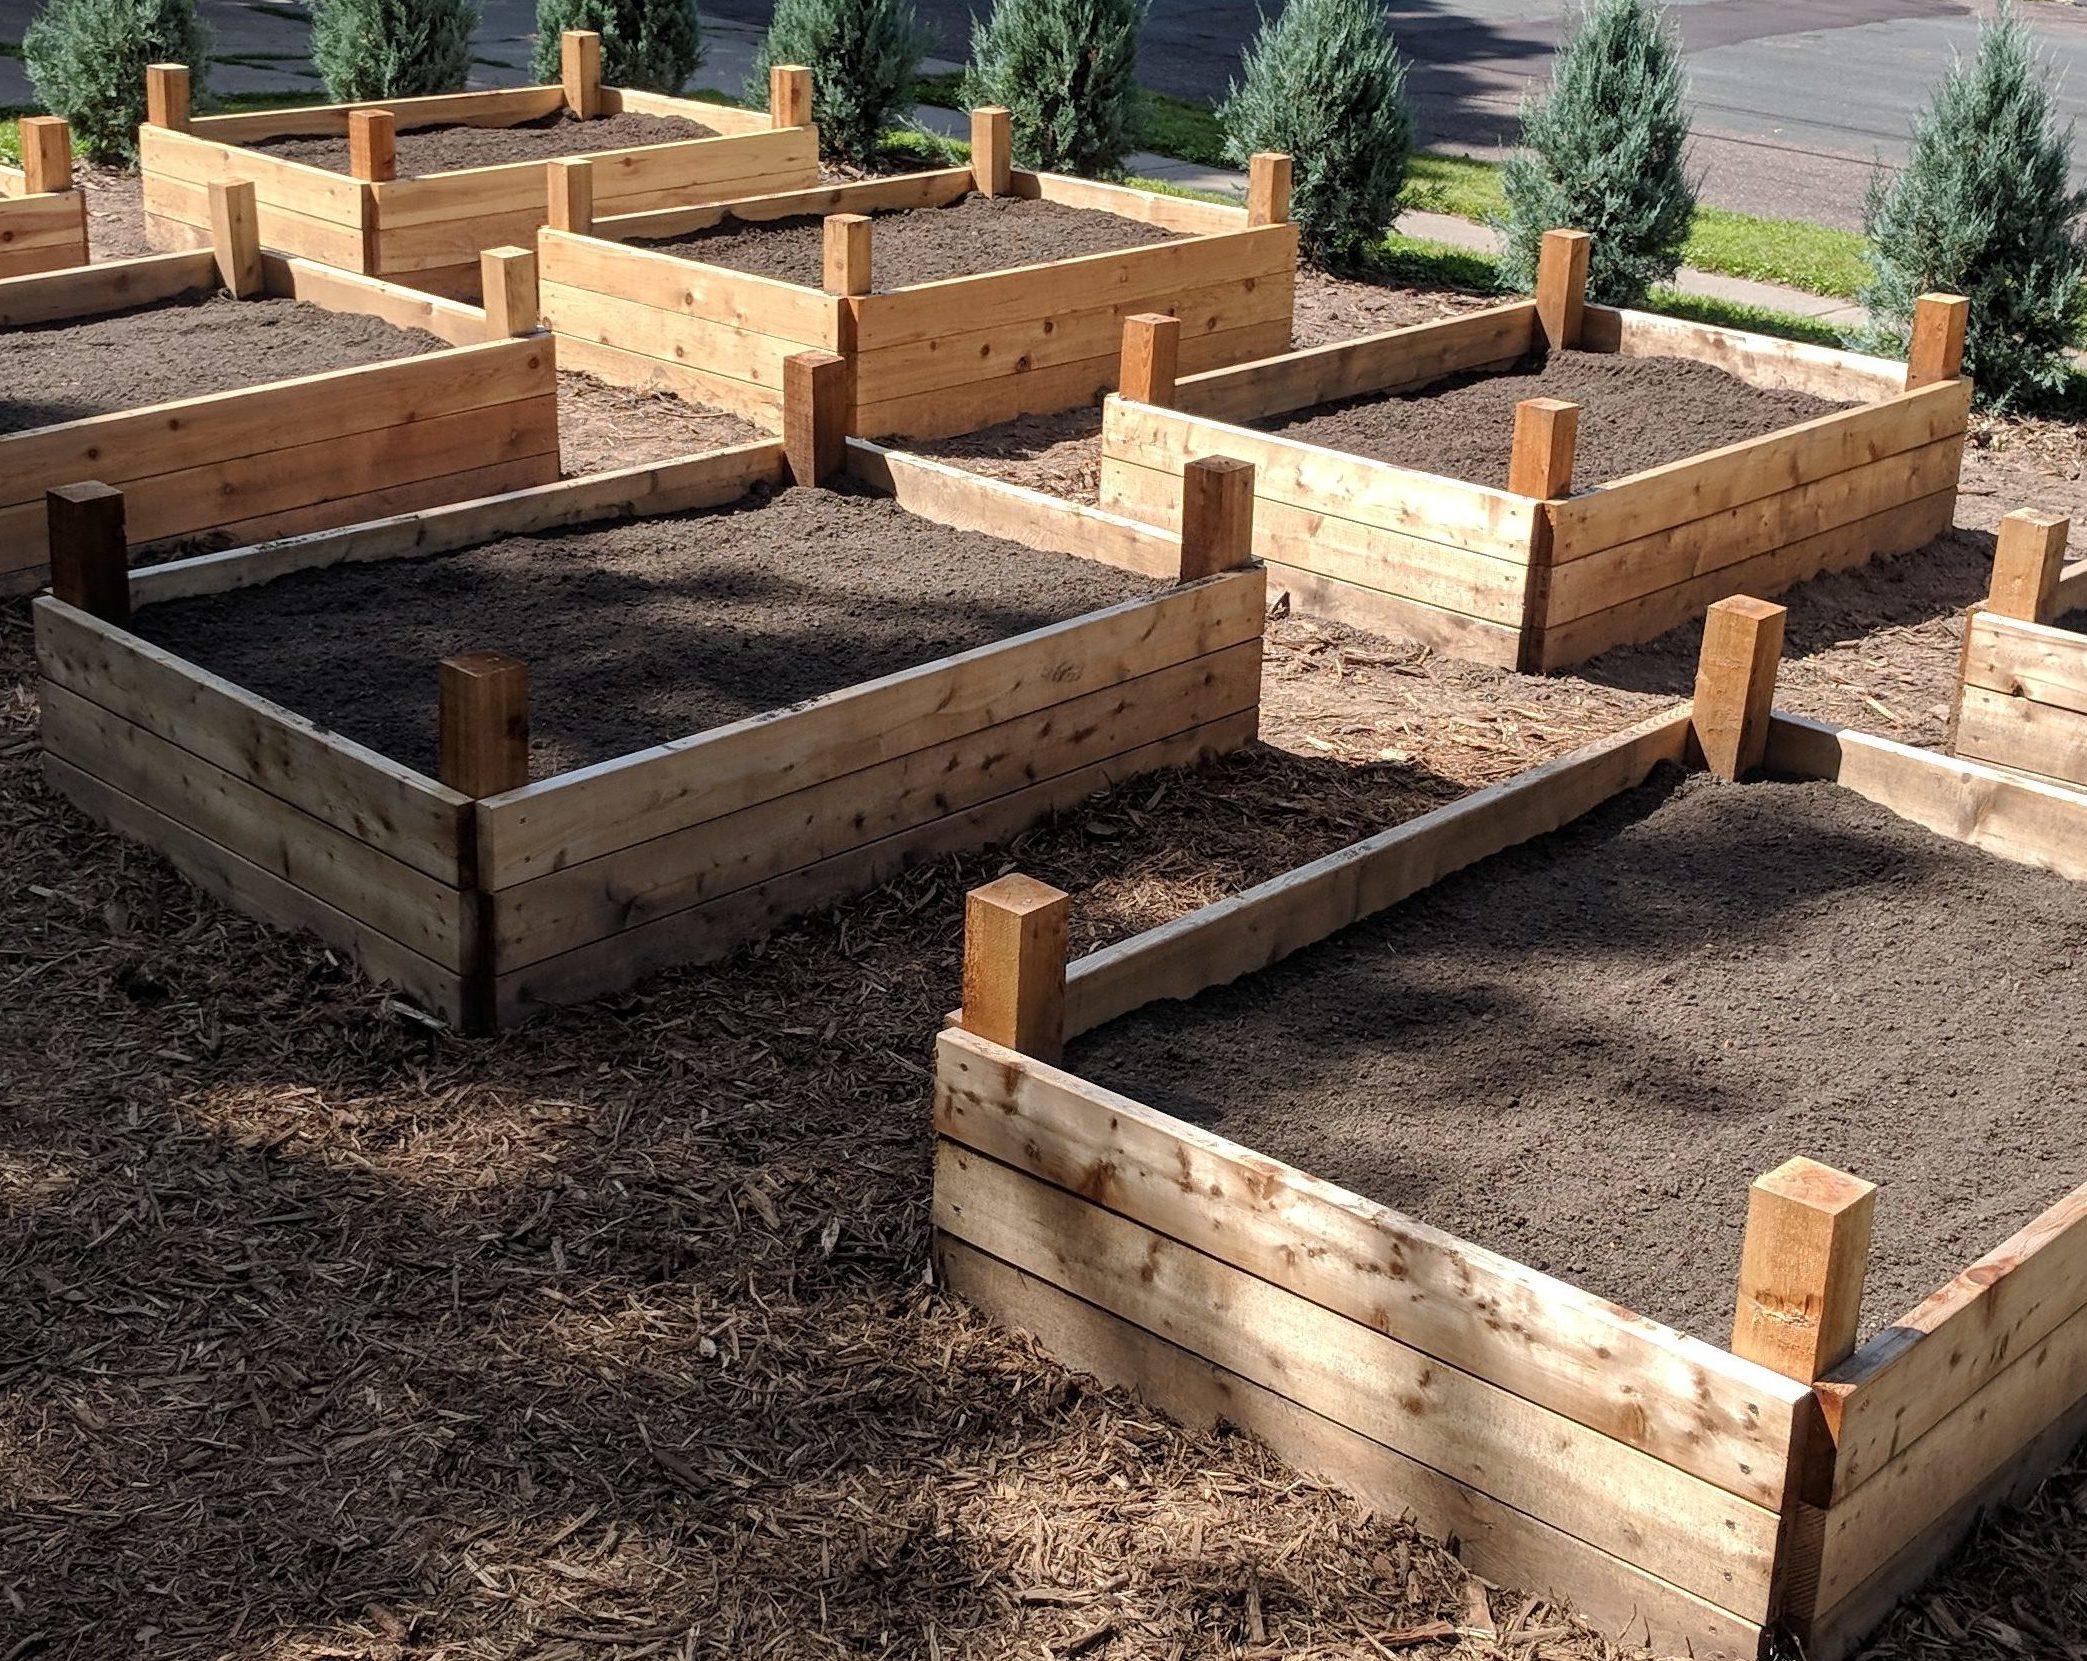 Newly built cedar raised bed vegetable gardens.